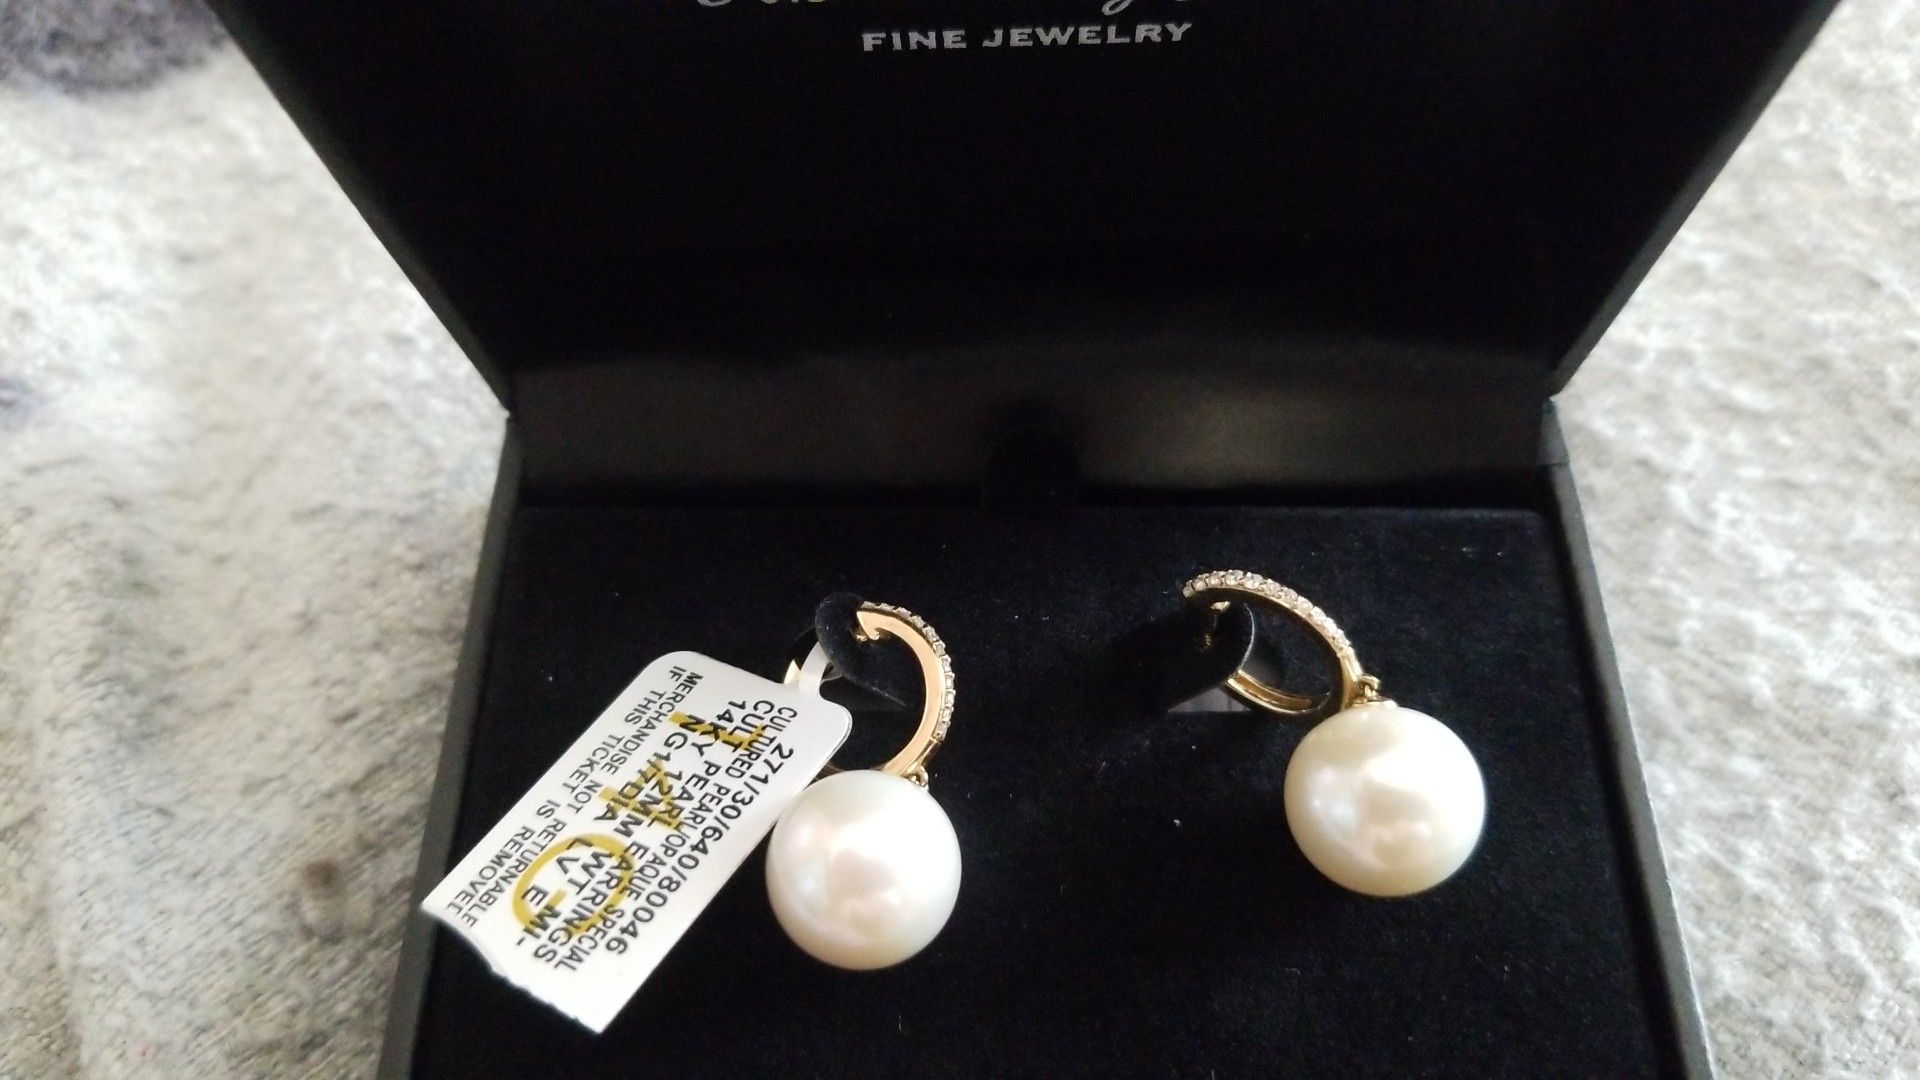  Diamond and Pearl earrings